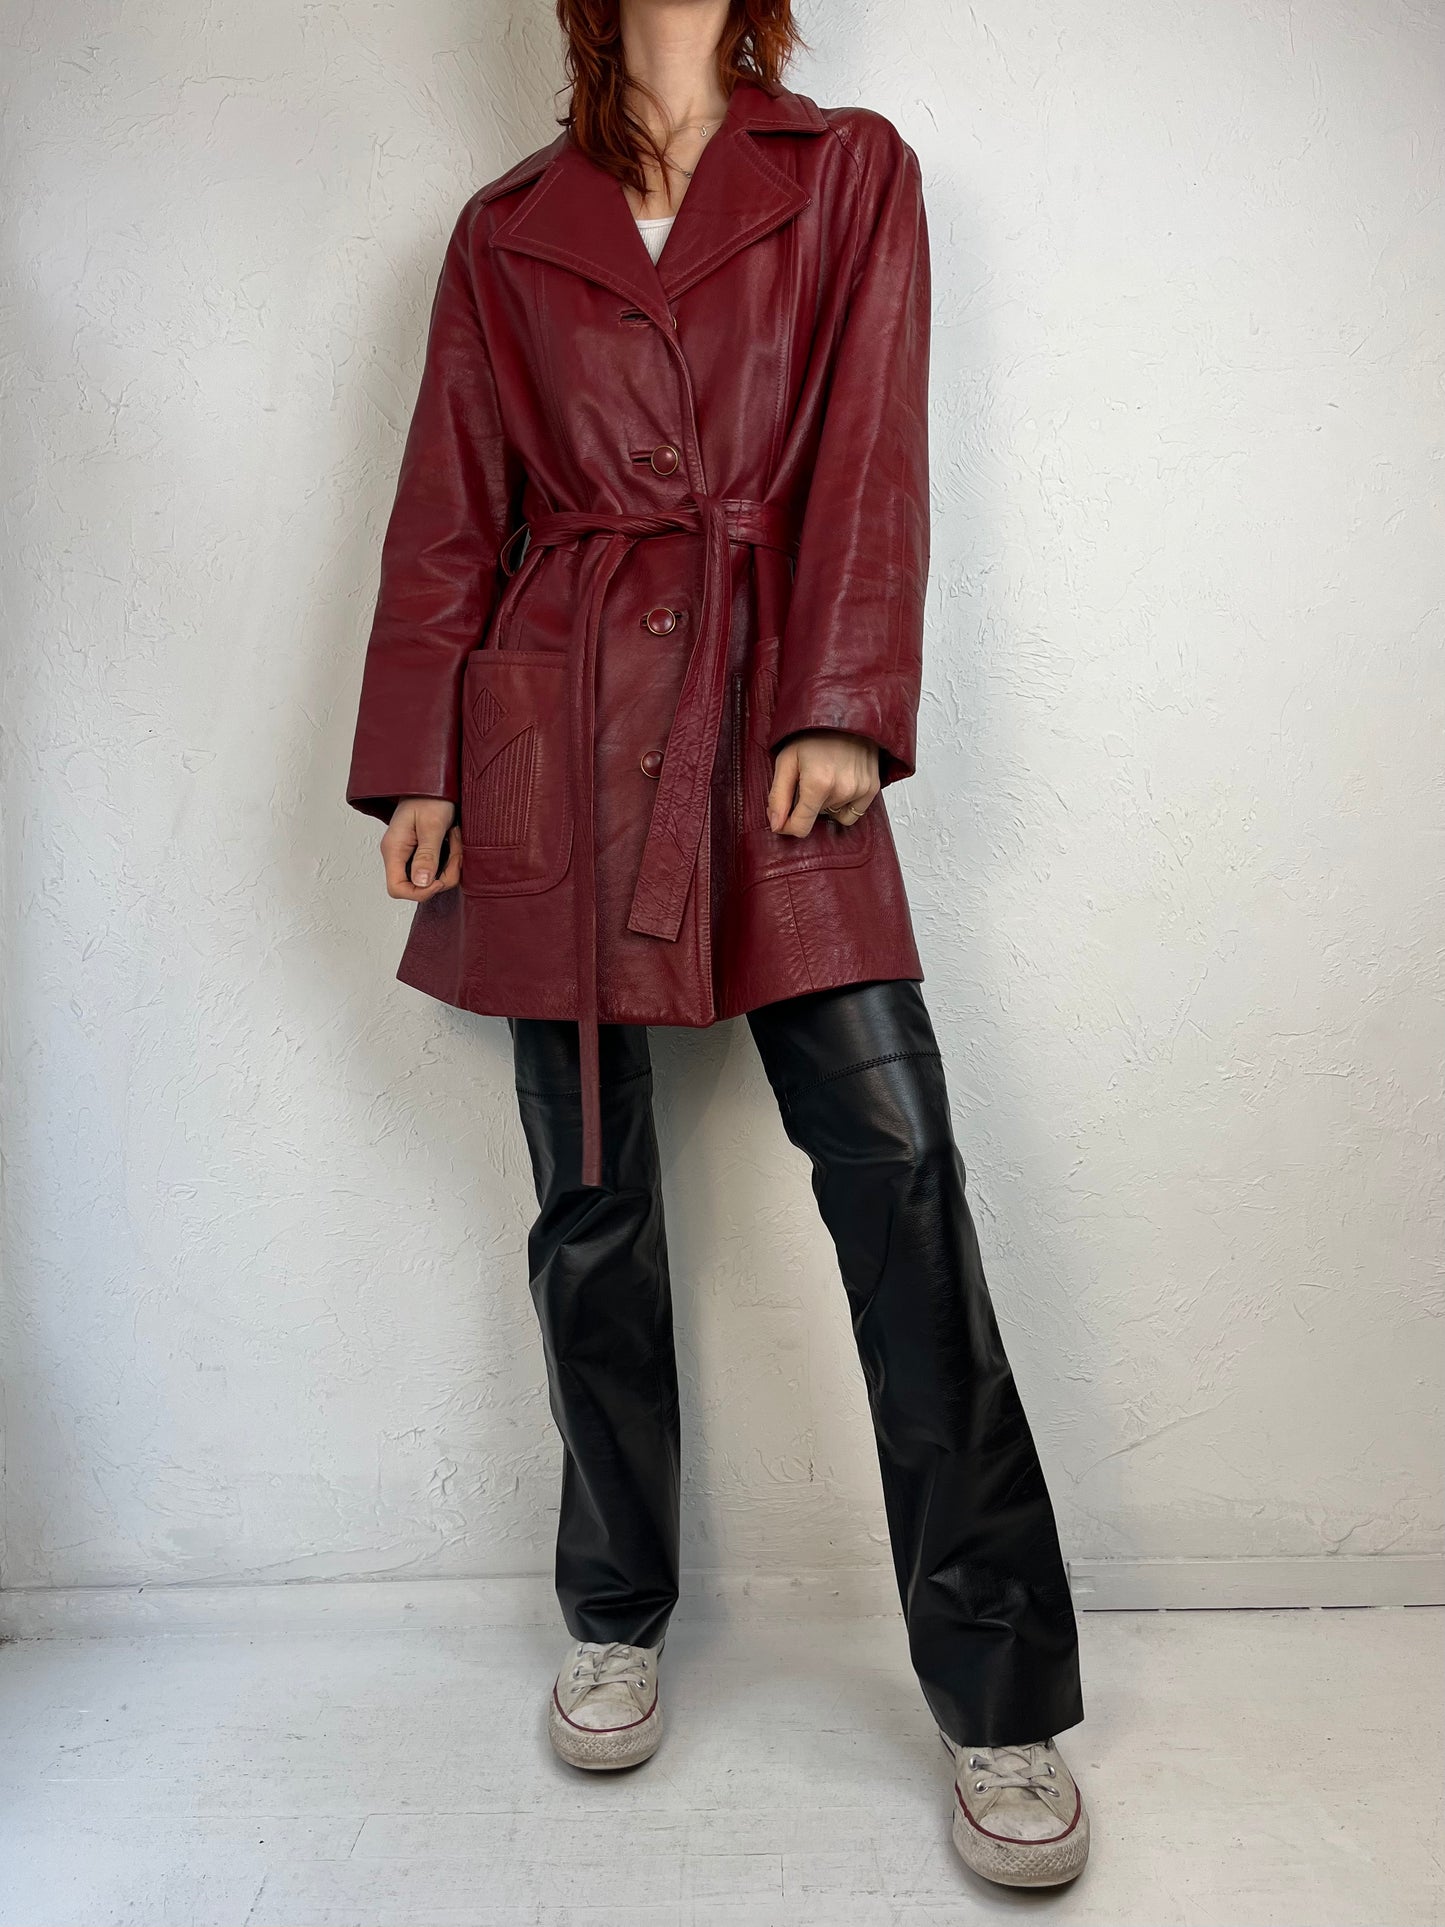 70s 'Dan Di Modes' Red Leather Half Trench Coat Jacket / Medium